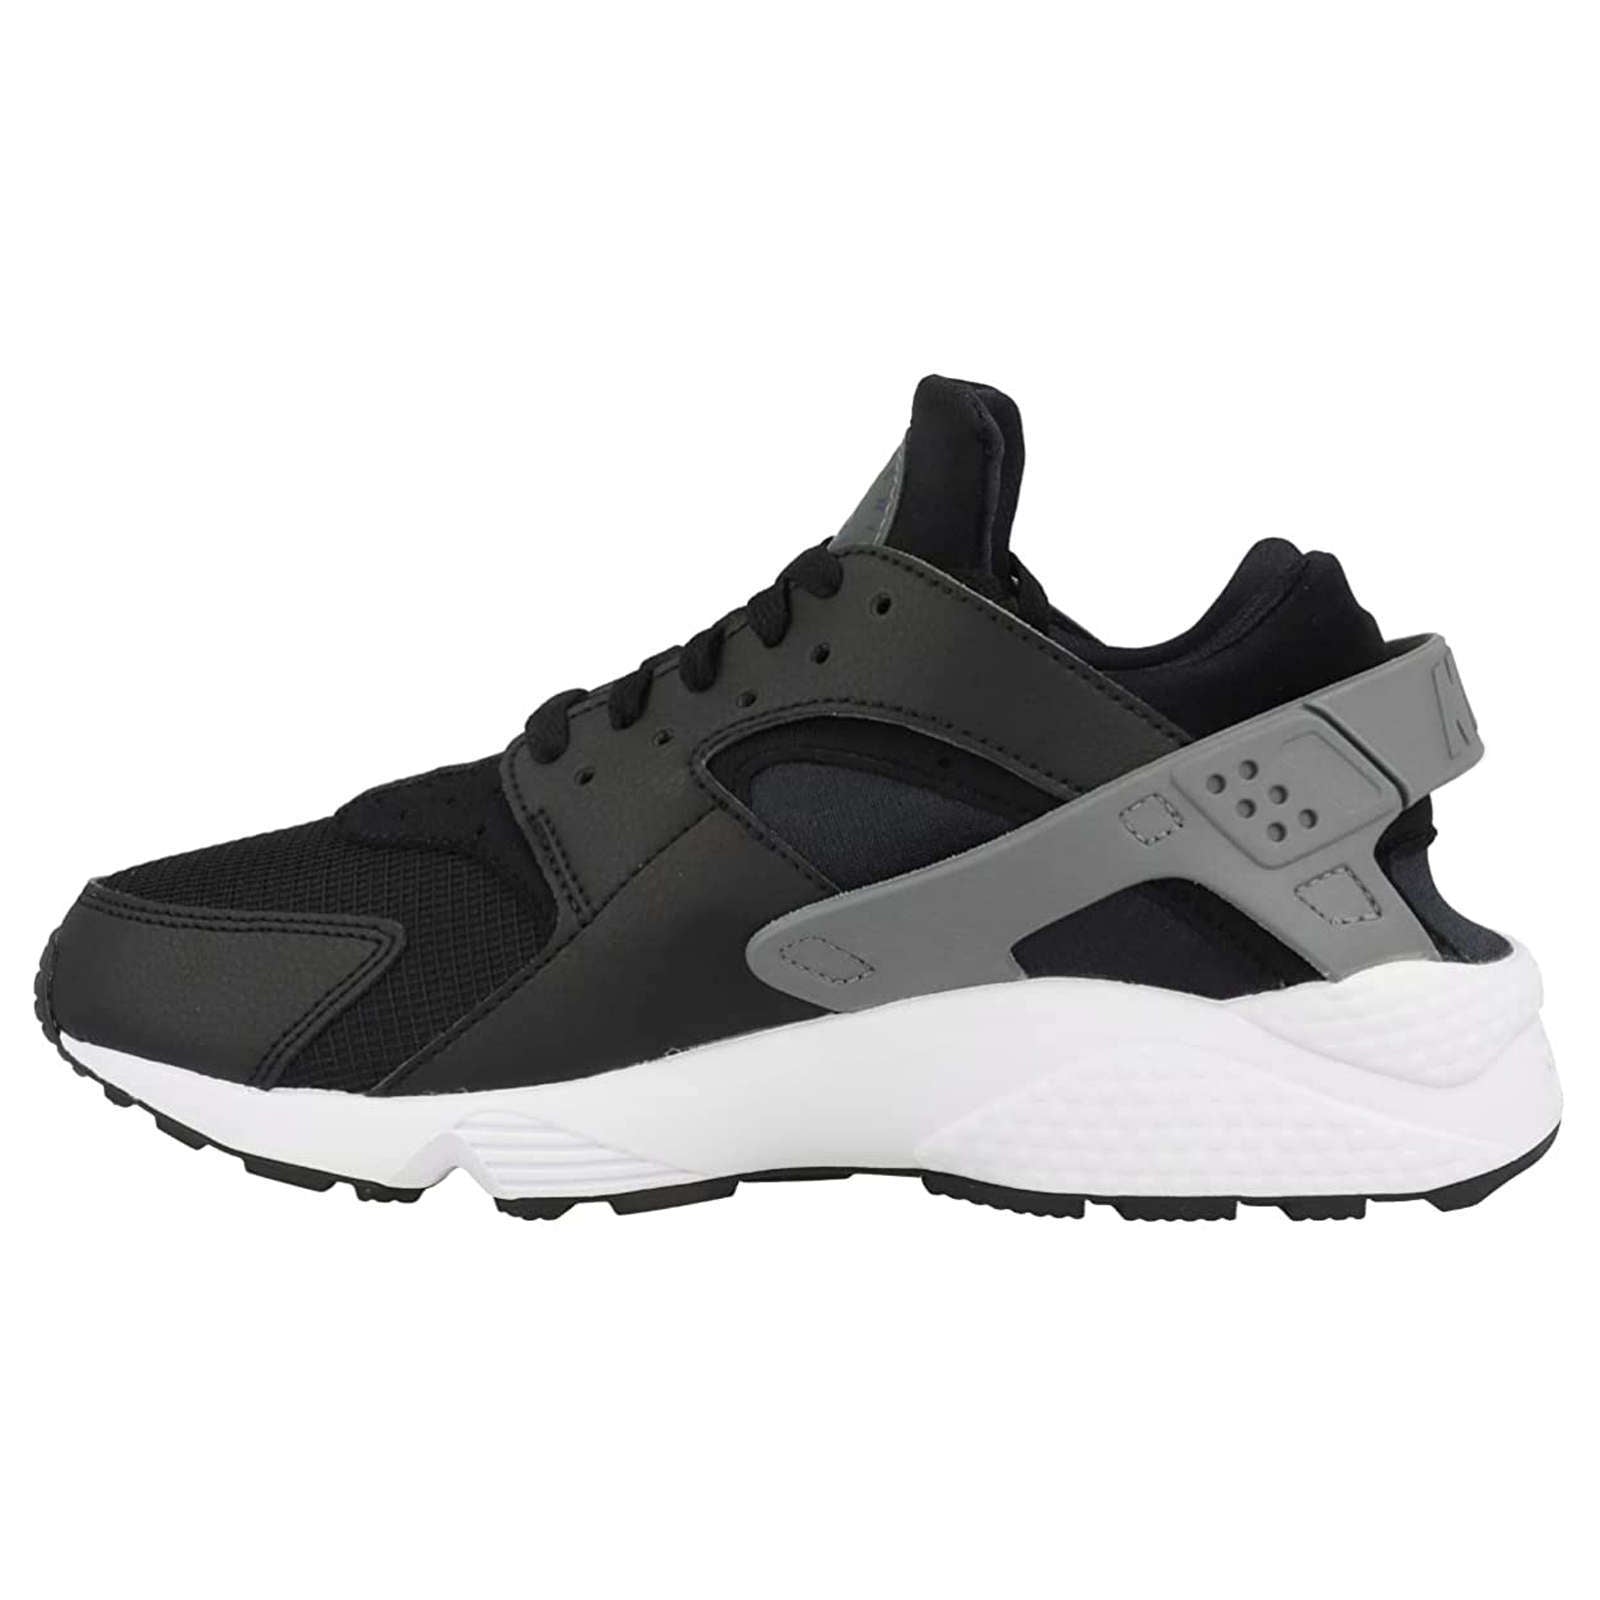 Nike Air Huarache J22 Synthetic Textile Unisex Low-Top Sneakers#color_black marina smoke grey white